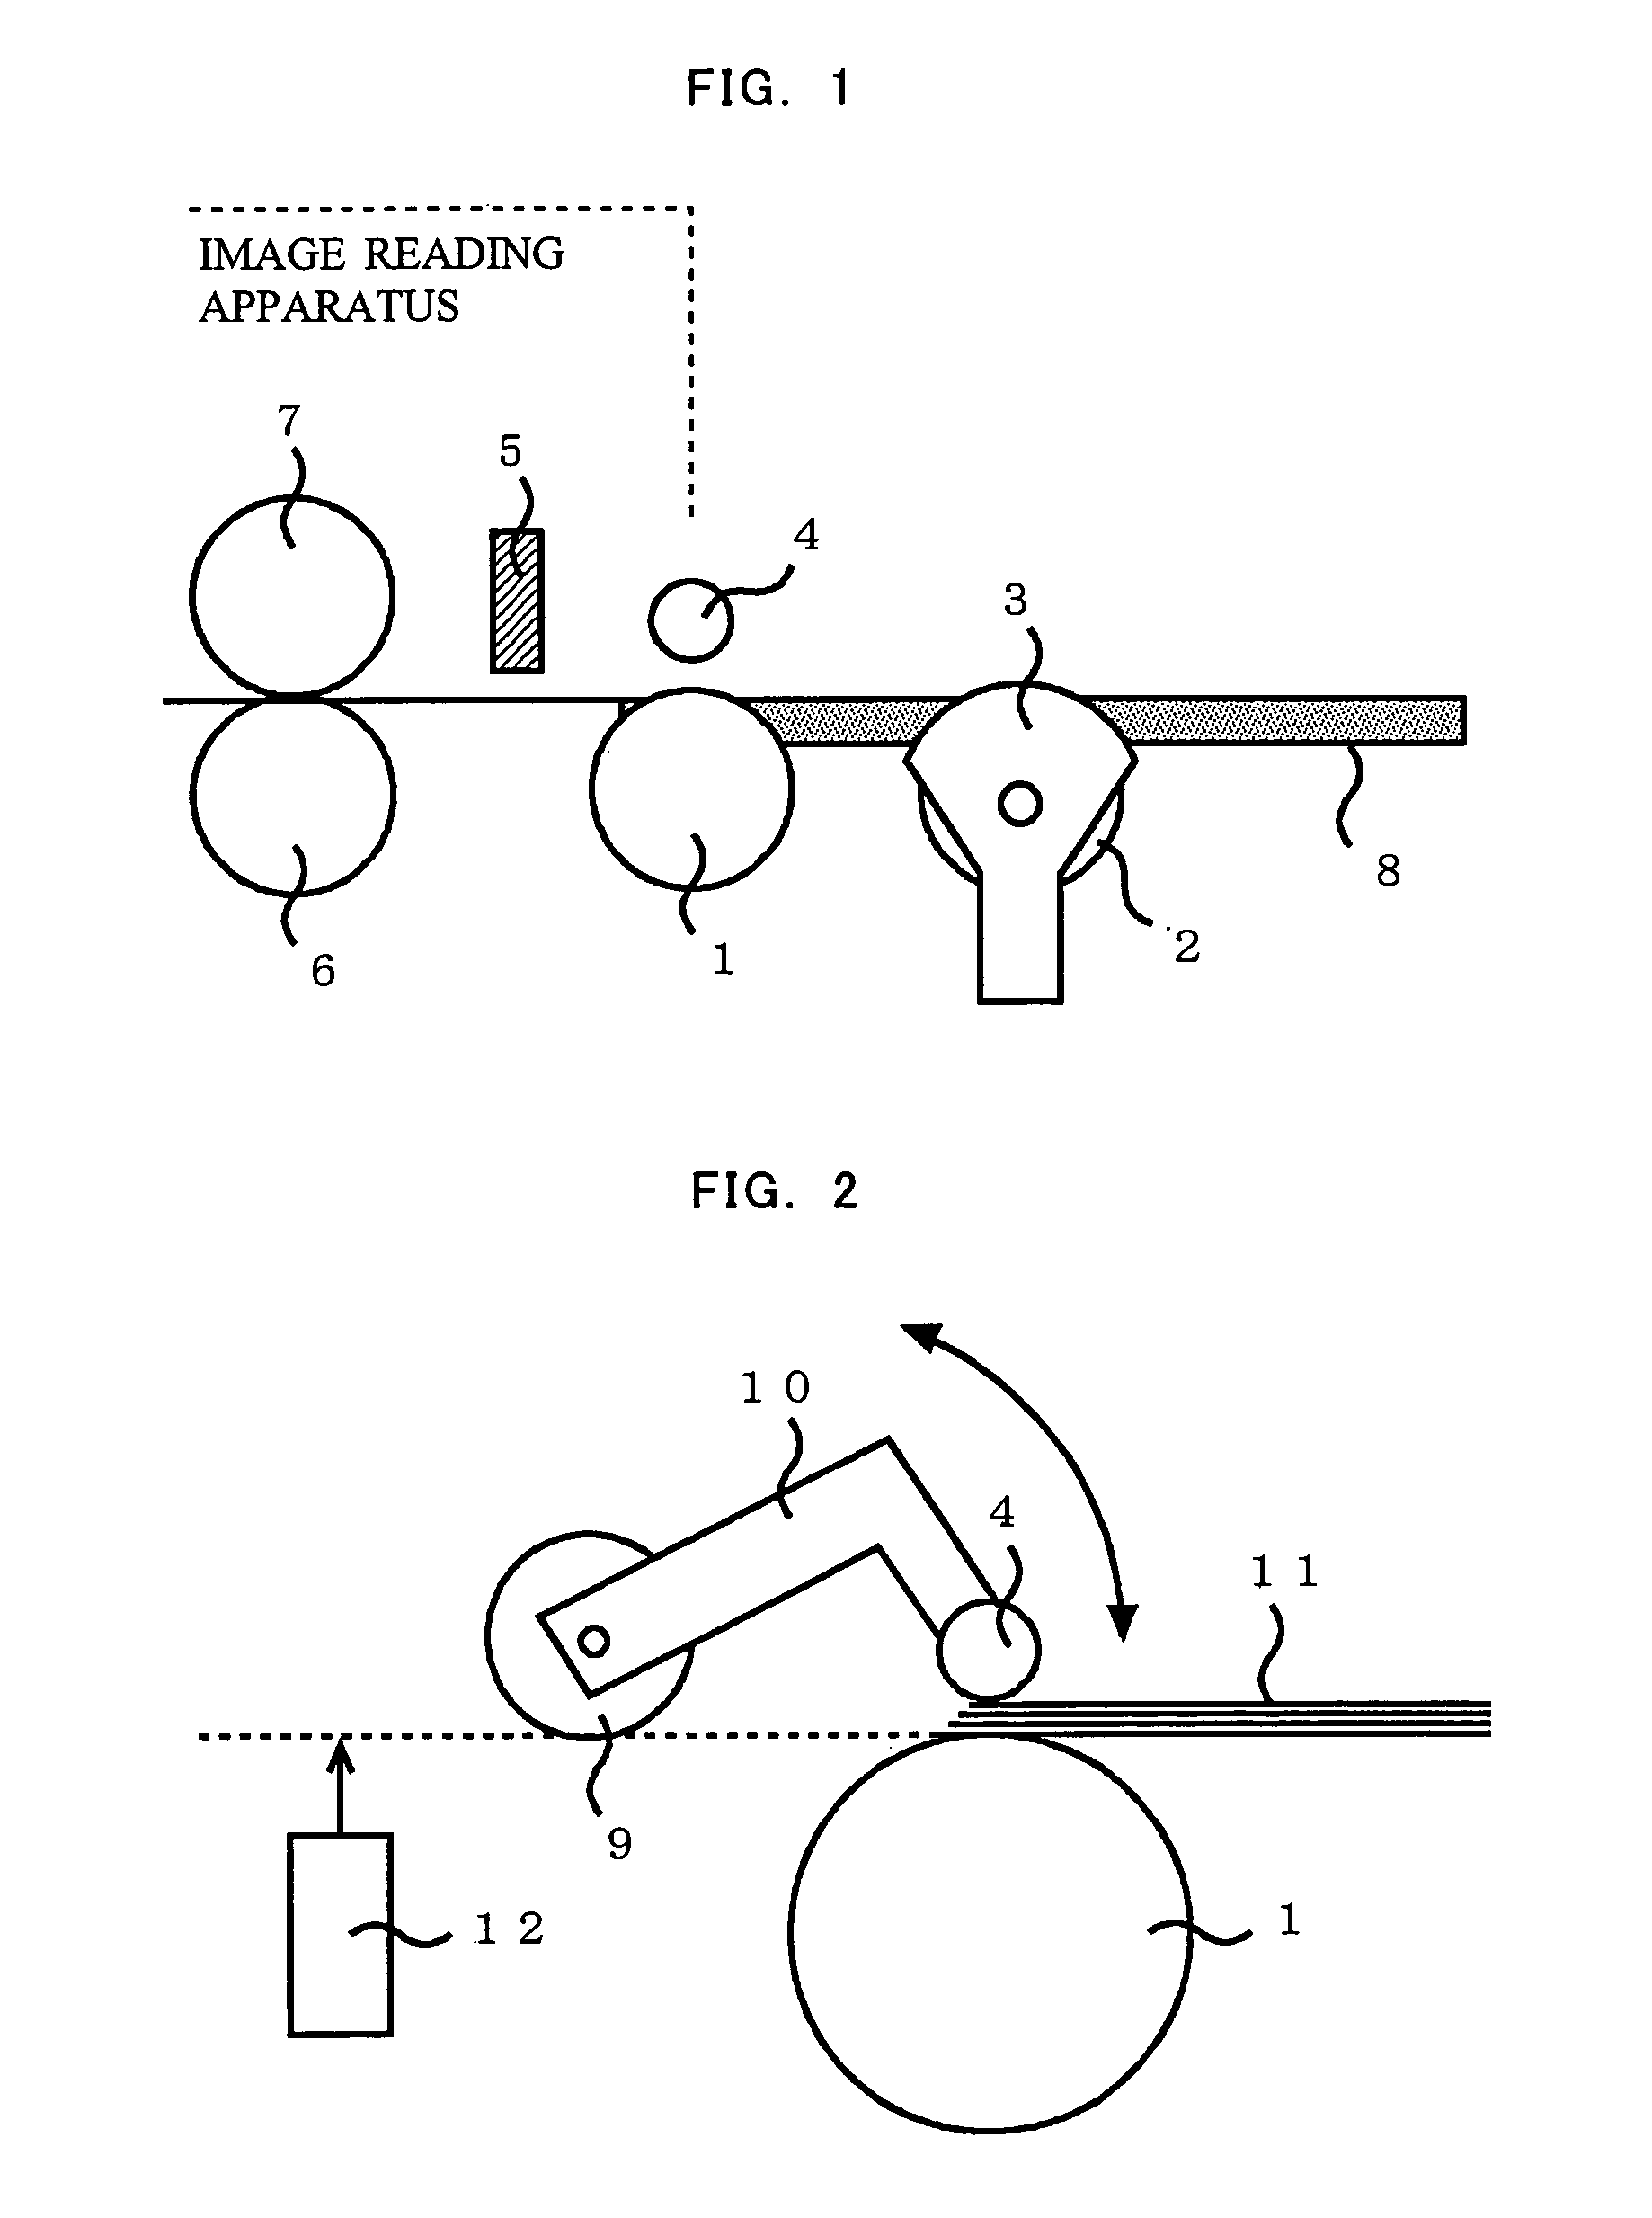 Paper supply apparatus